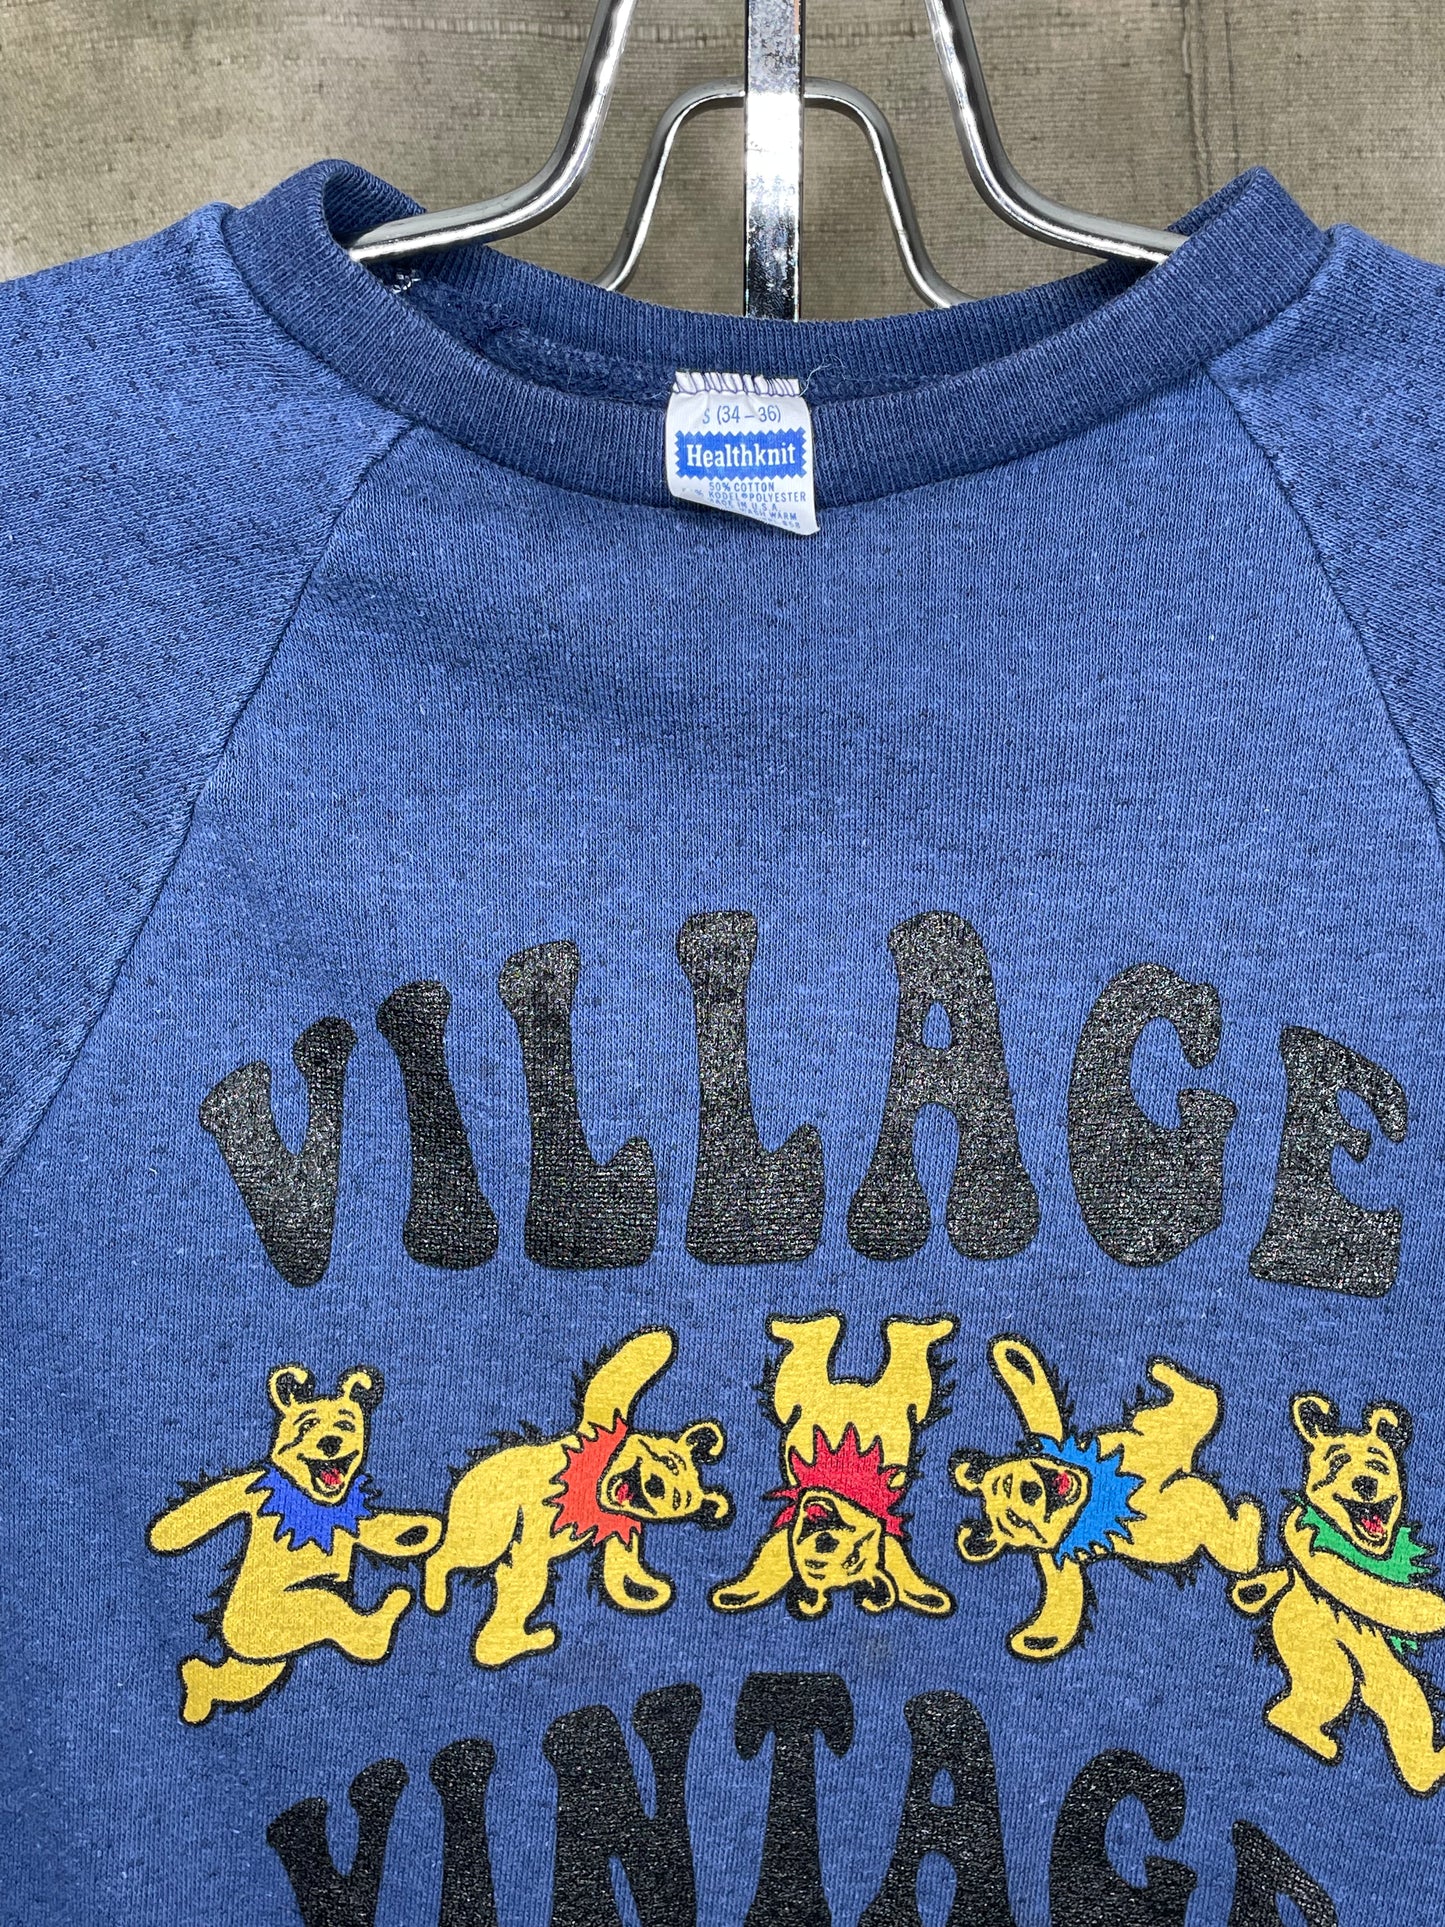 Village Vintage Frolicking Bear Logo on Hand Sourced Vintage Sweatshirt Blank XS